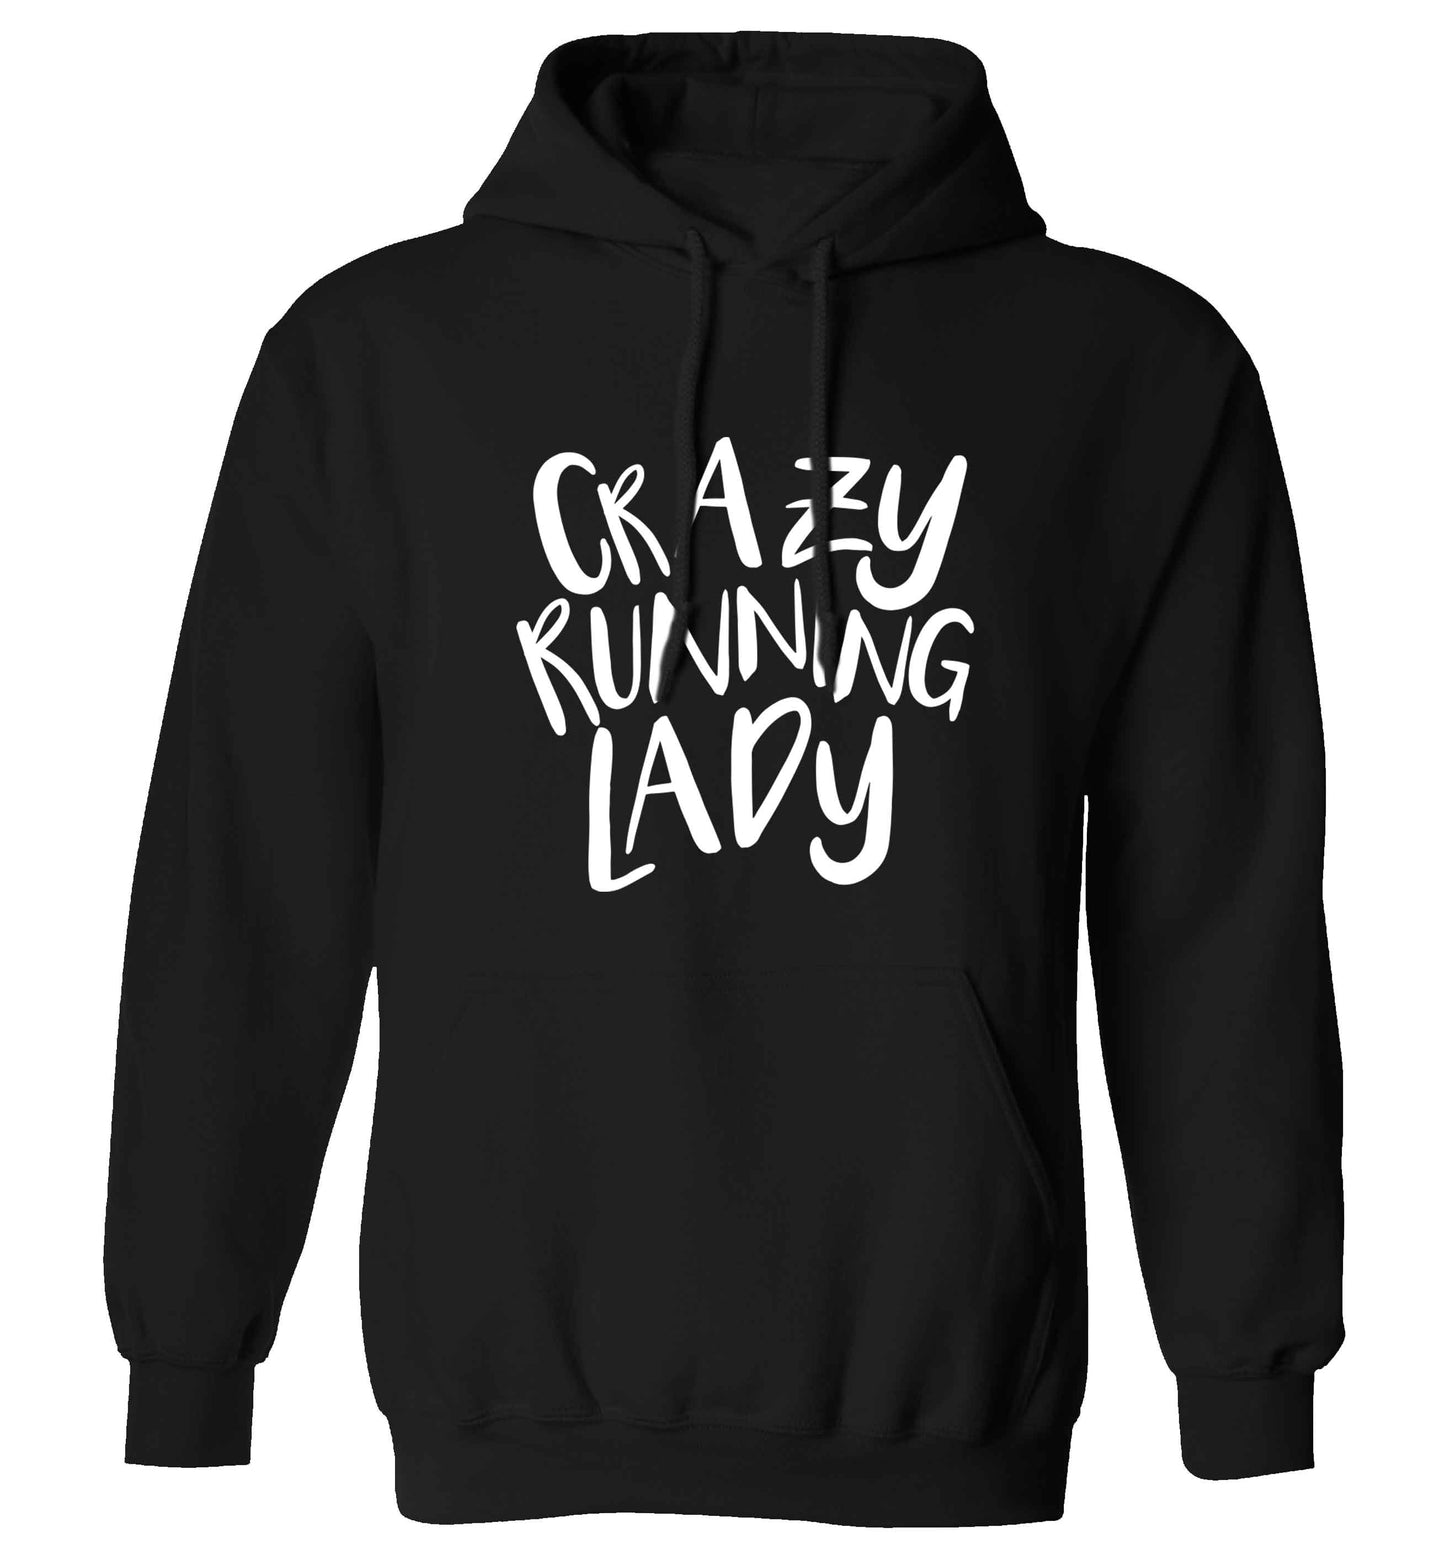 Crazy running lady adults unisex black hoodie 2XL